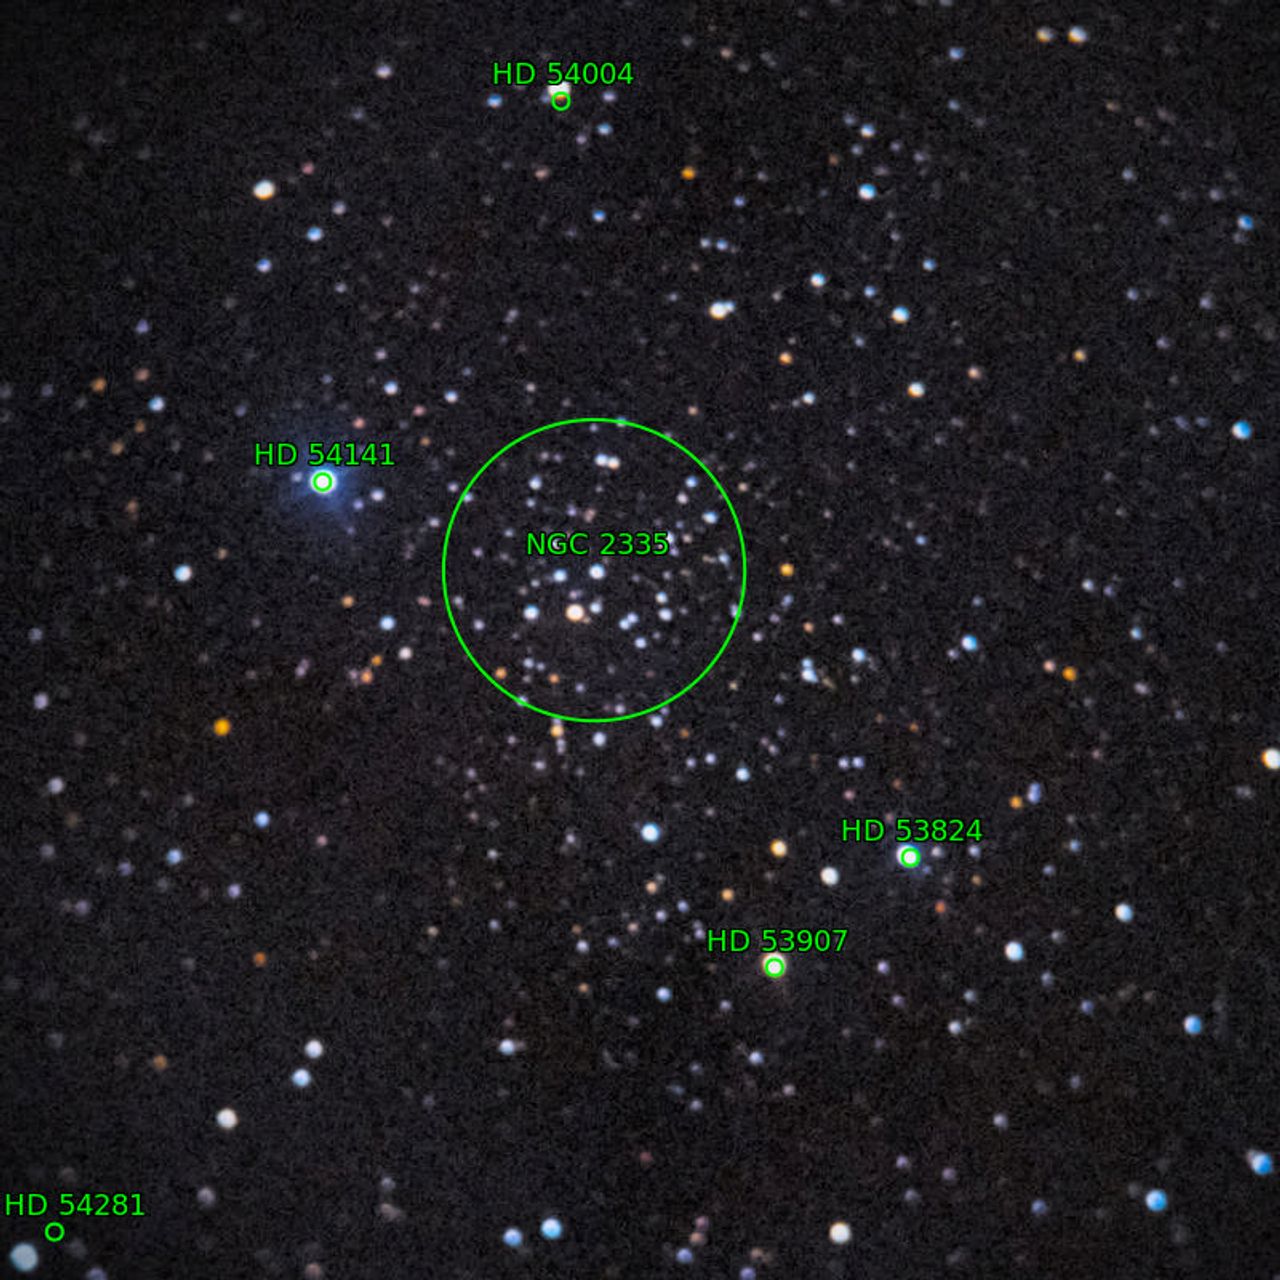 Annotation around NGC2335